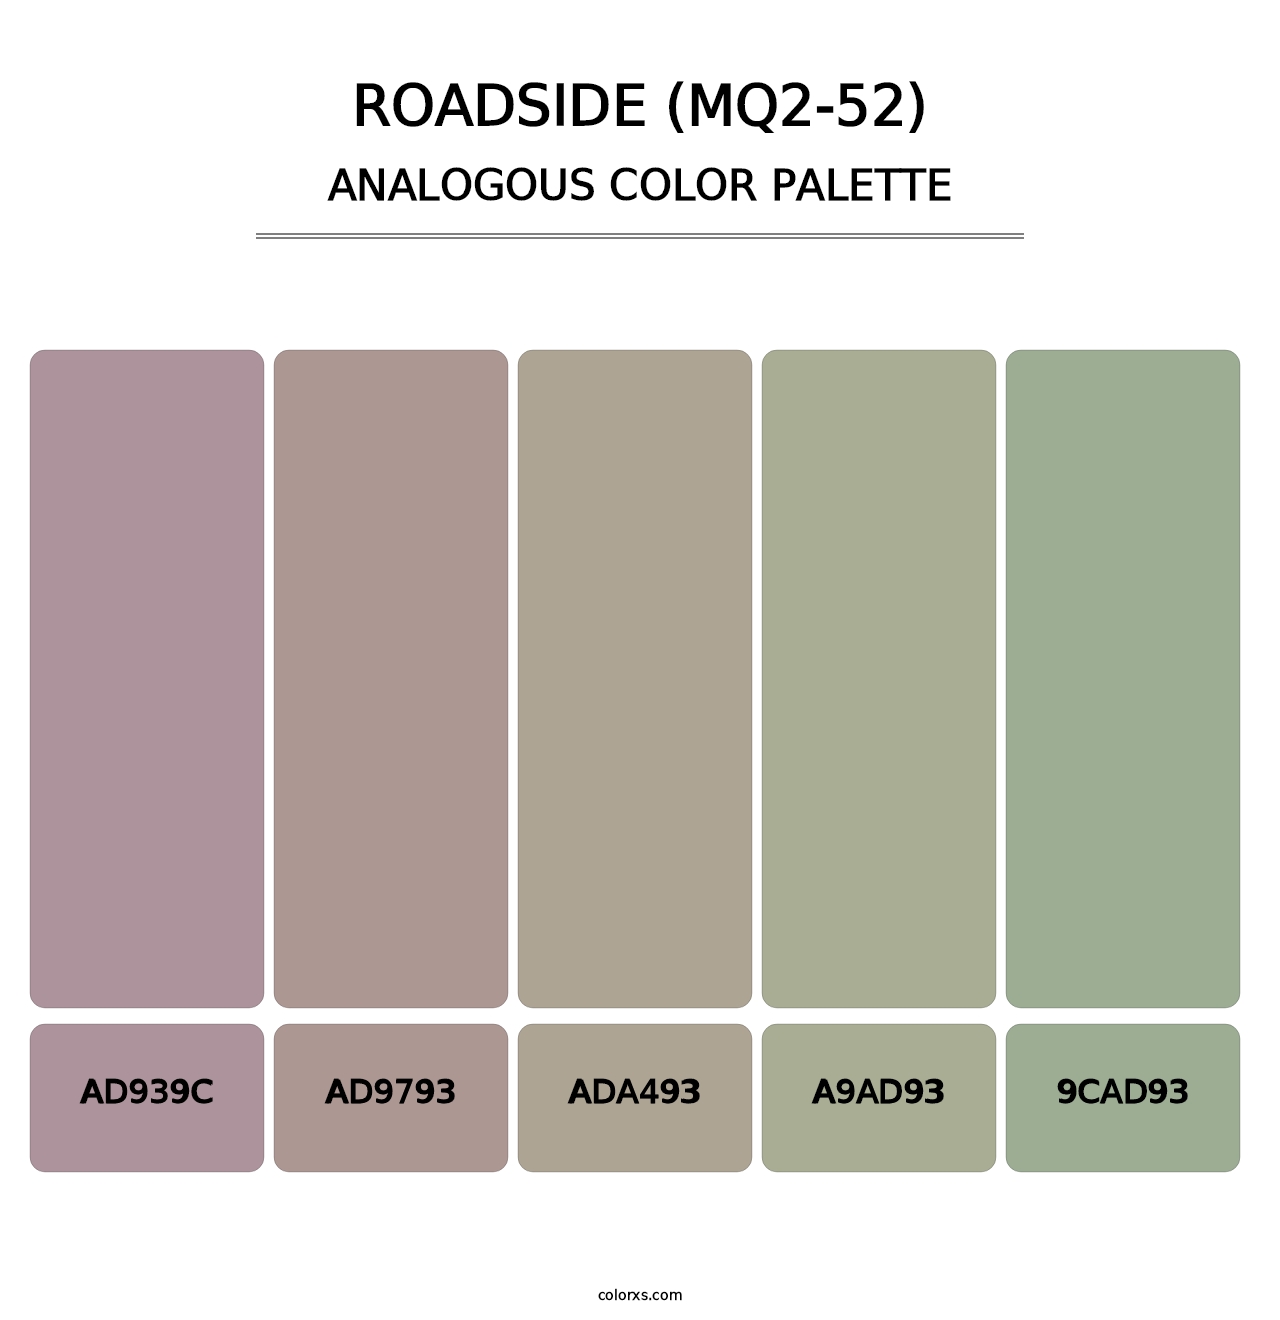 Roadside (MQ2-52) - Analogous Color Palette